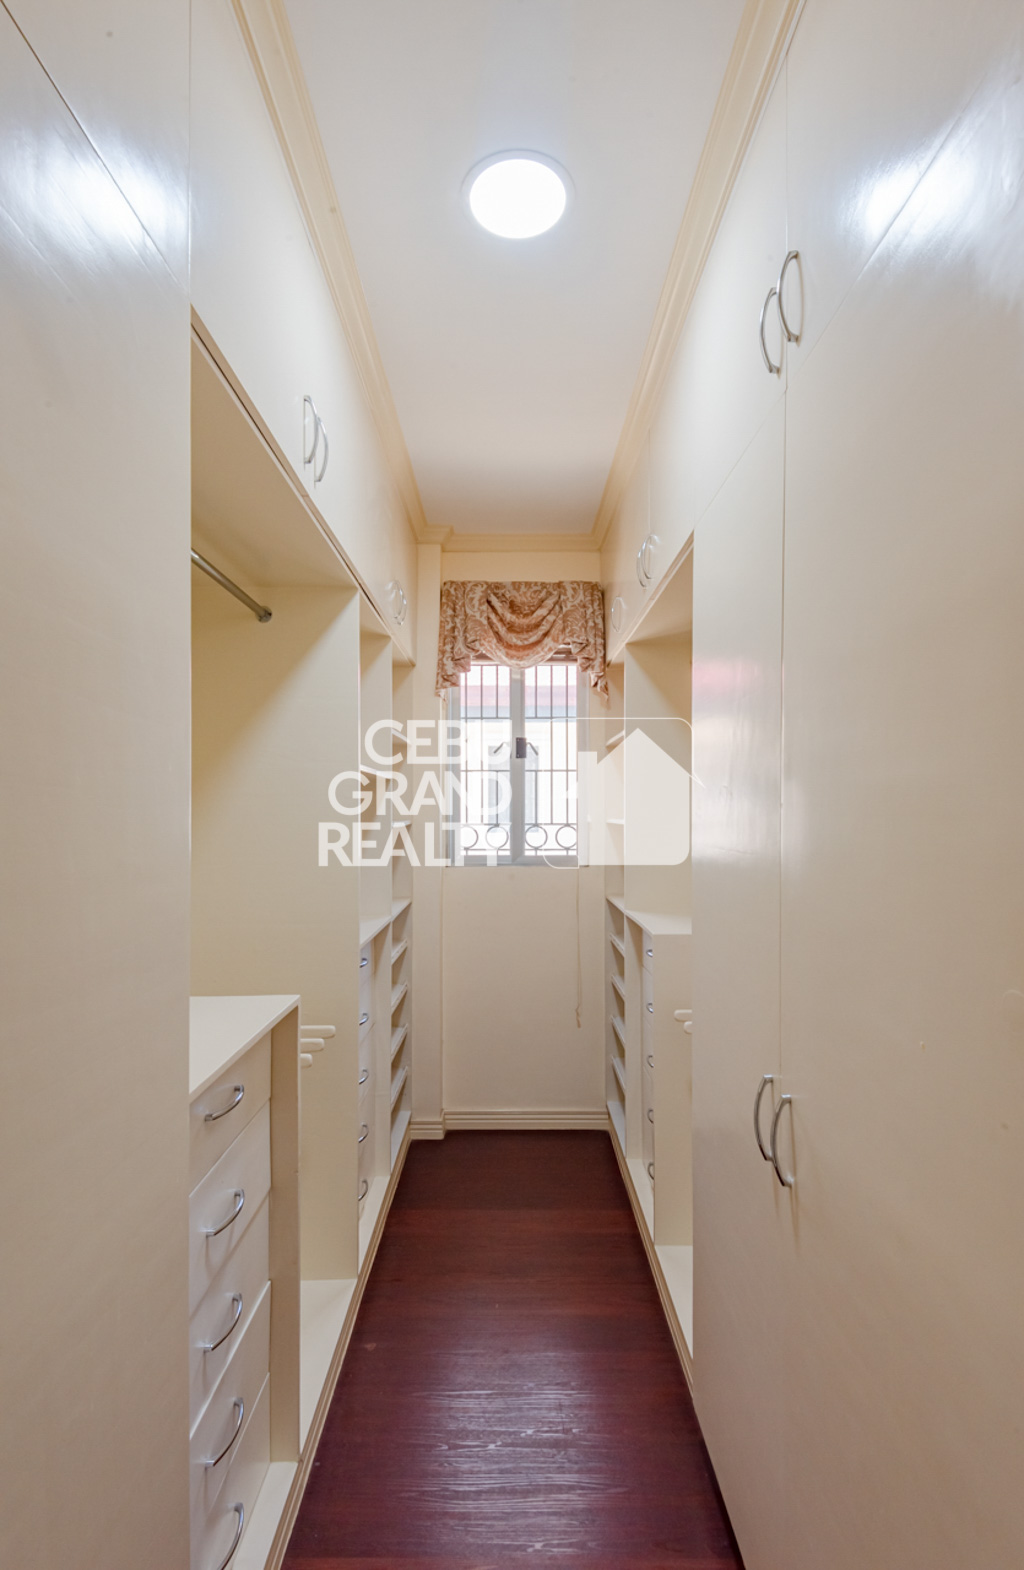 RHBP5 Furnished 3 Bedroom House for Rent in Banilad - Cebu Grand Realty (12)